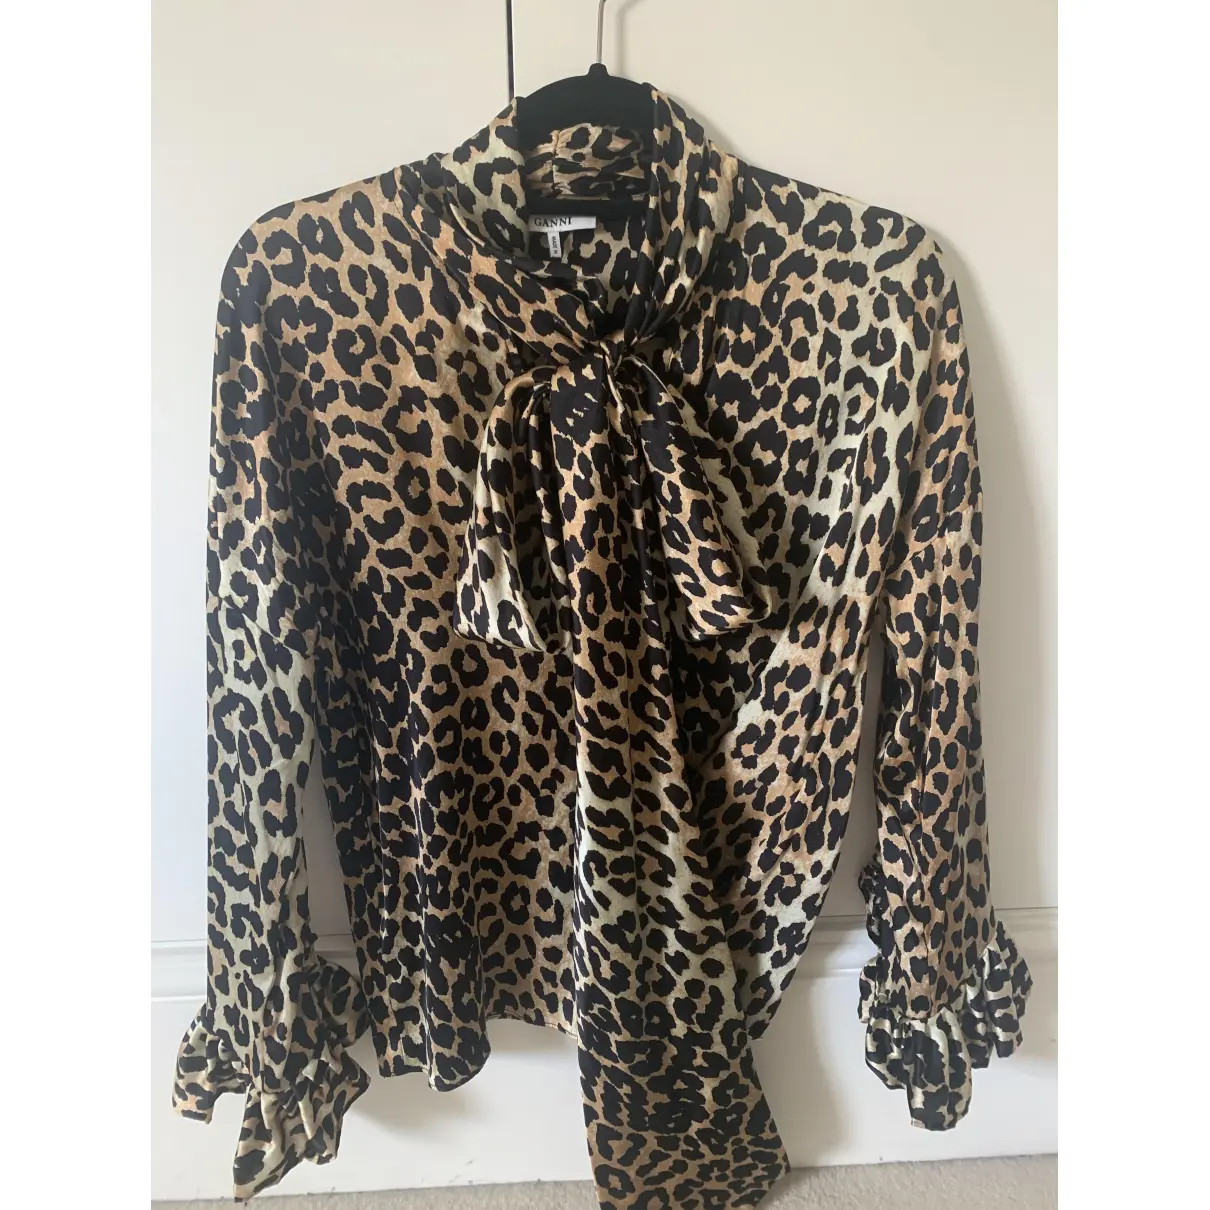 Buy Ganni Fall Winter 2019 silk blouse online